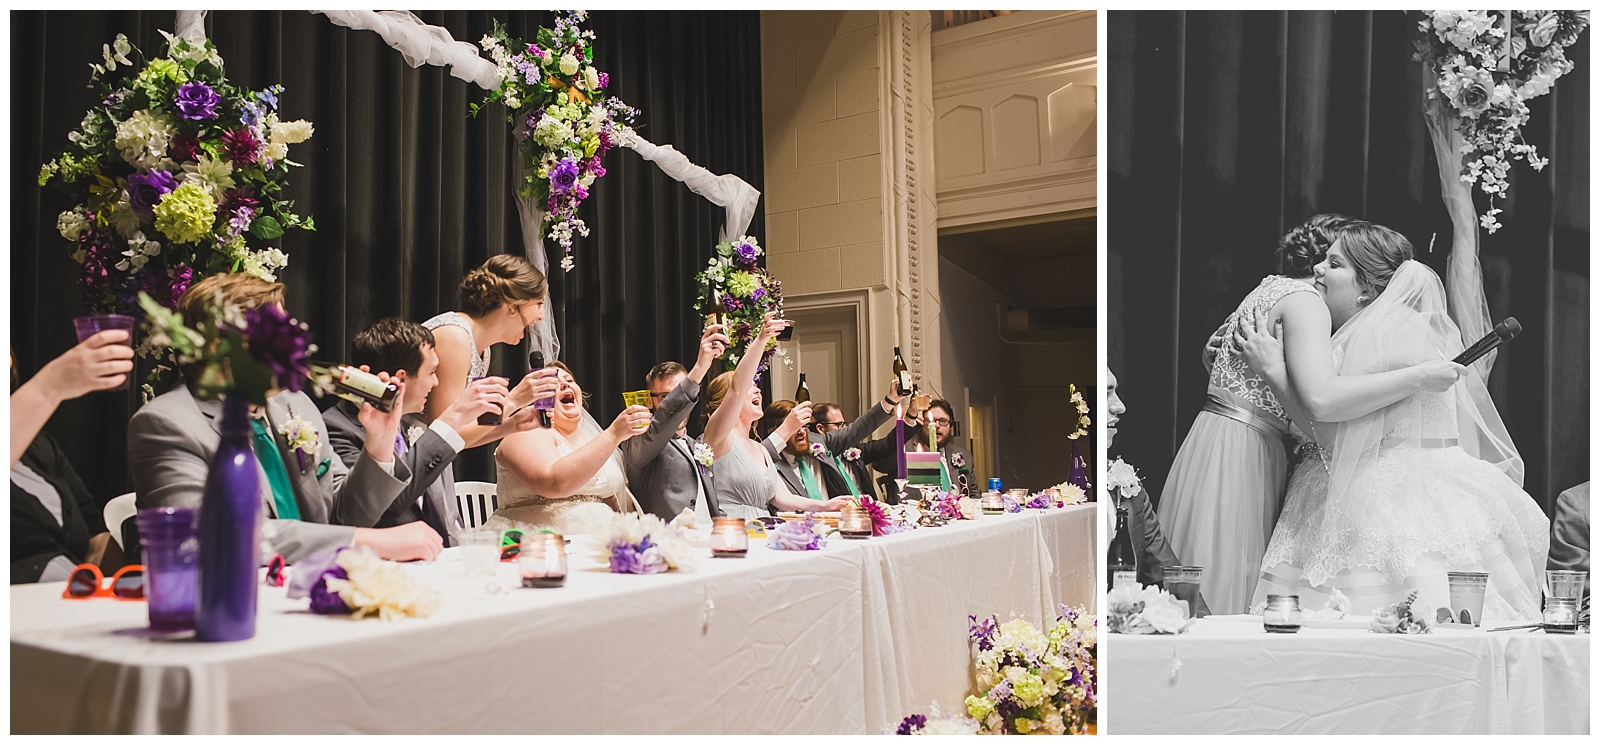 Wedding photography at Drexel Hall by Kansas City wedding photographers Wisdom-Watson Weddings.